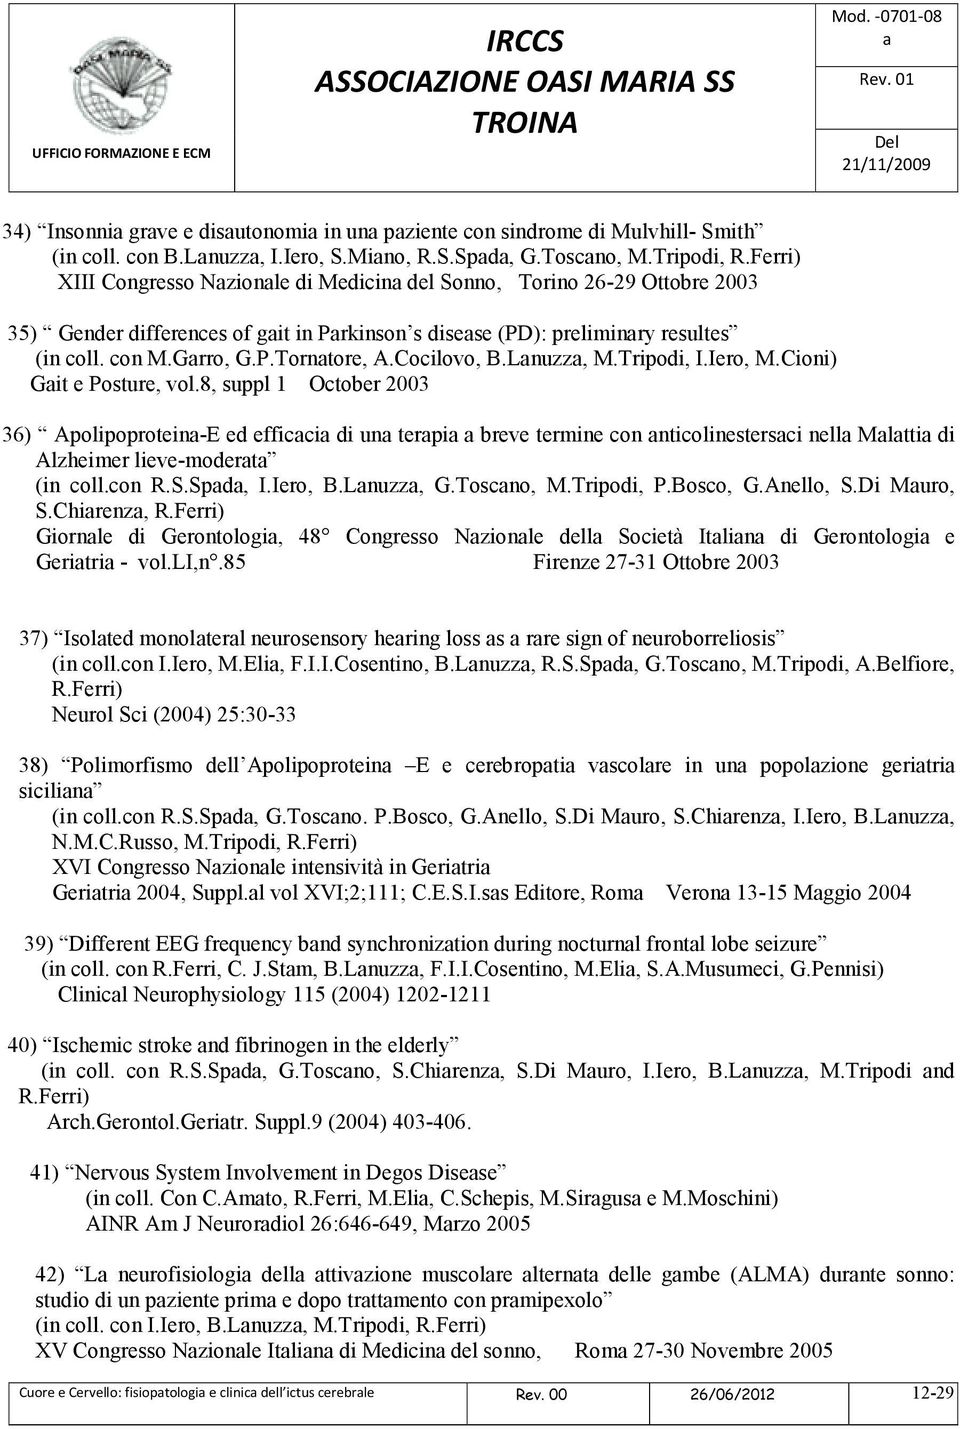 Cocilovo, B.Lnuzz, M.Tripodi, I.Iero, M.Cioni) Git e Posture, vol.